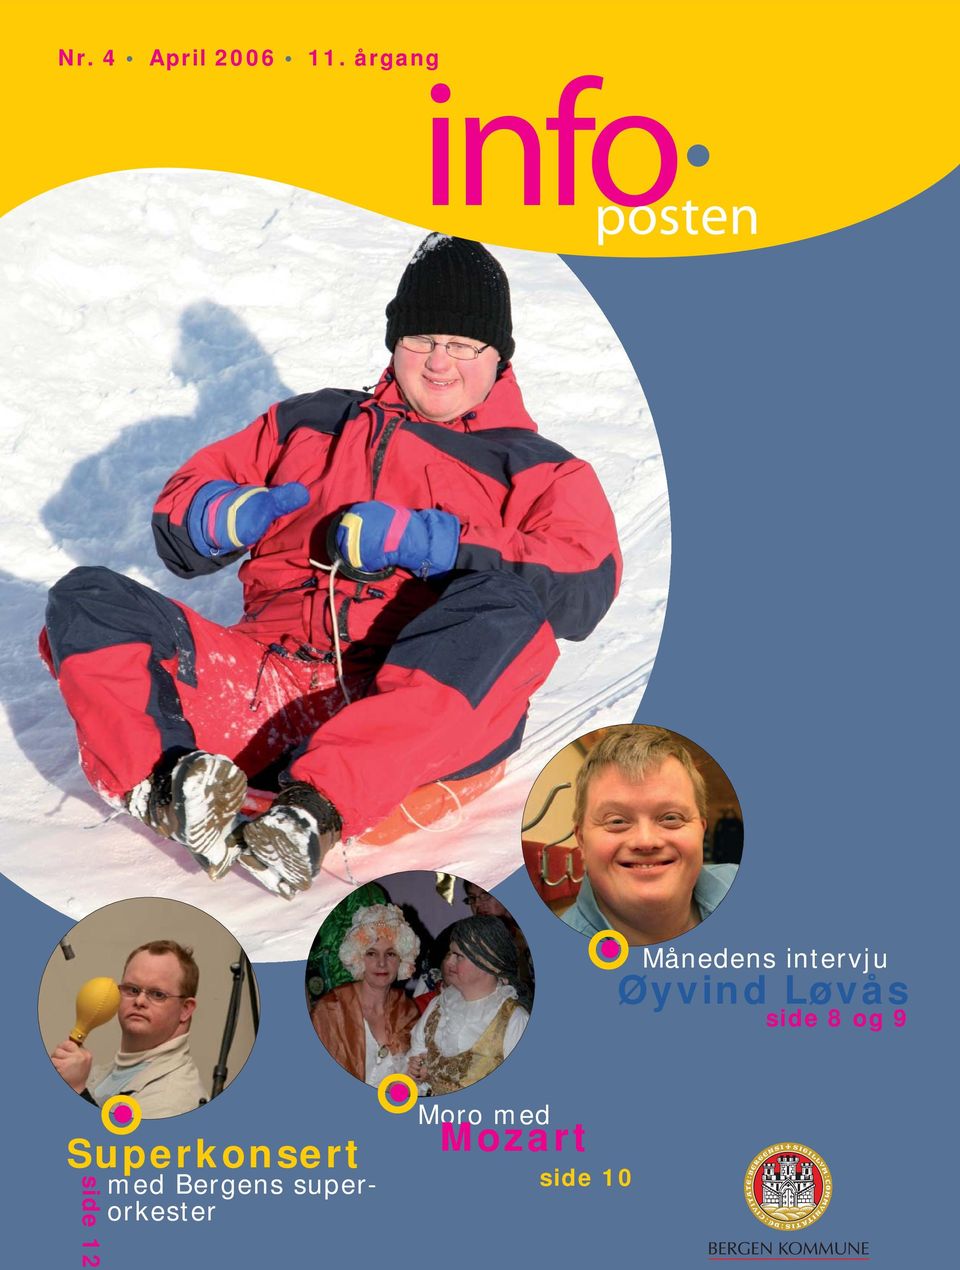 Øyvind Løvås side 8 og 9 Superkonsert